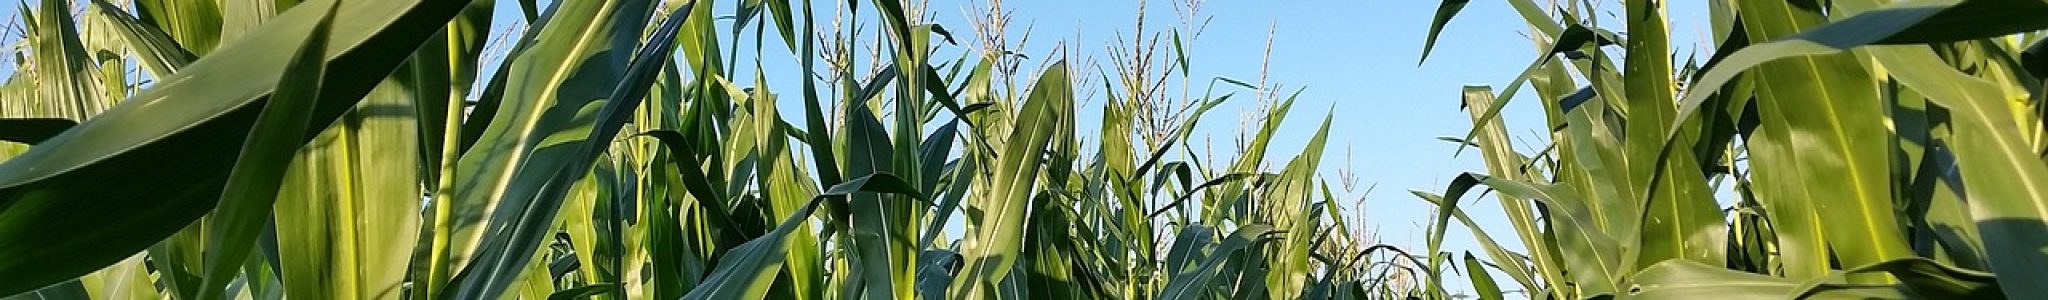 cornfield, monoculture, landscape-2685413.jpg